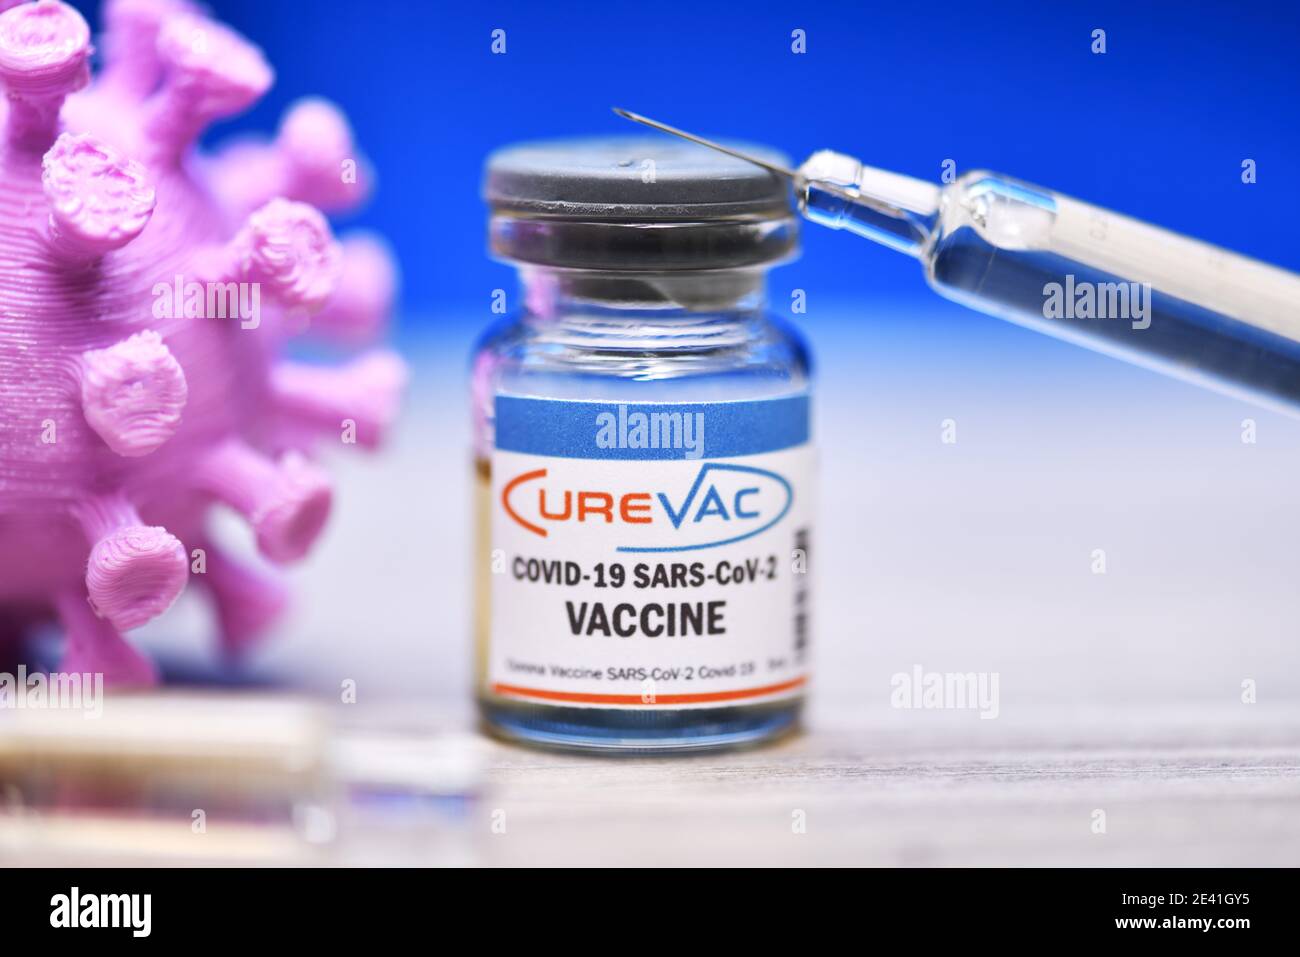 CureVac Covid Vaccine, Symbolic Image Stock Photo